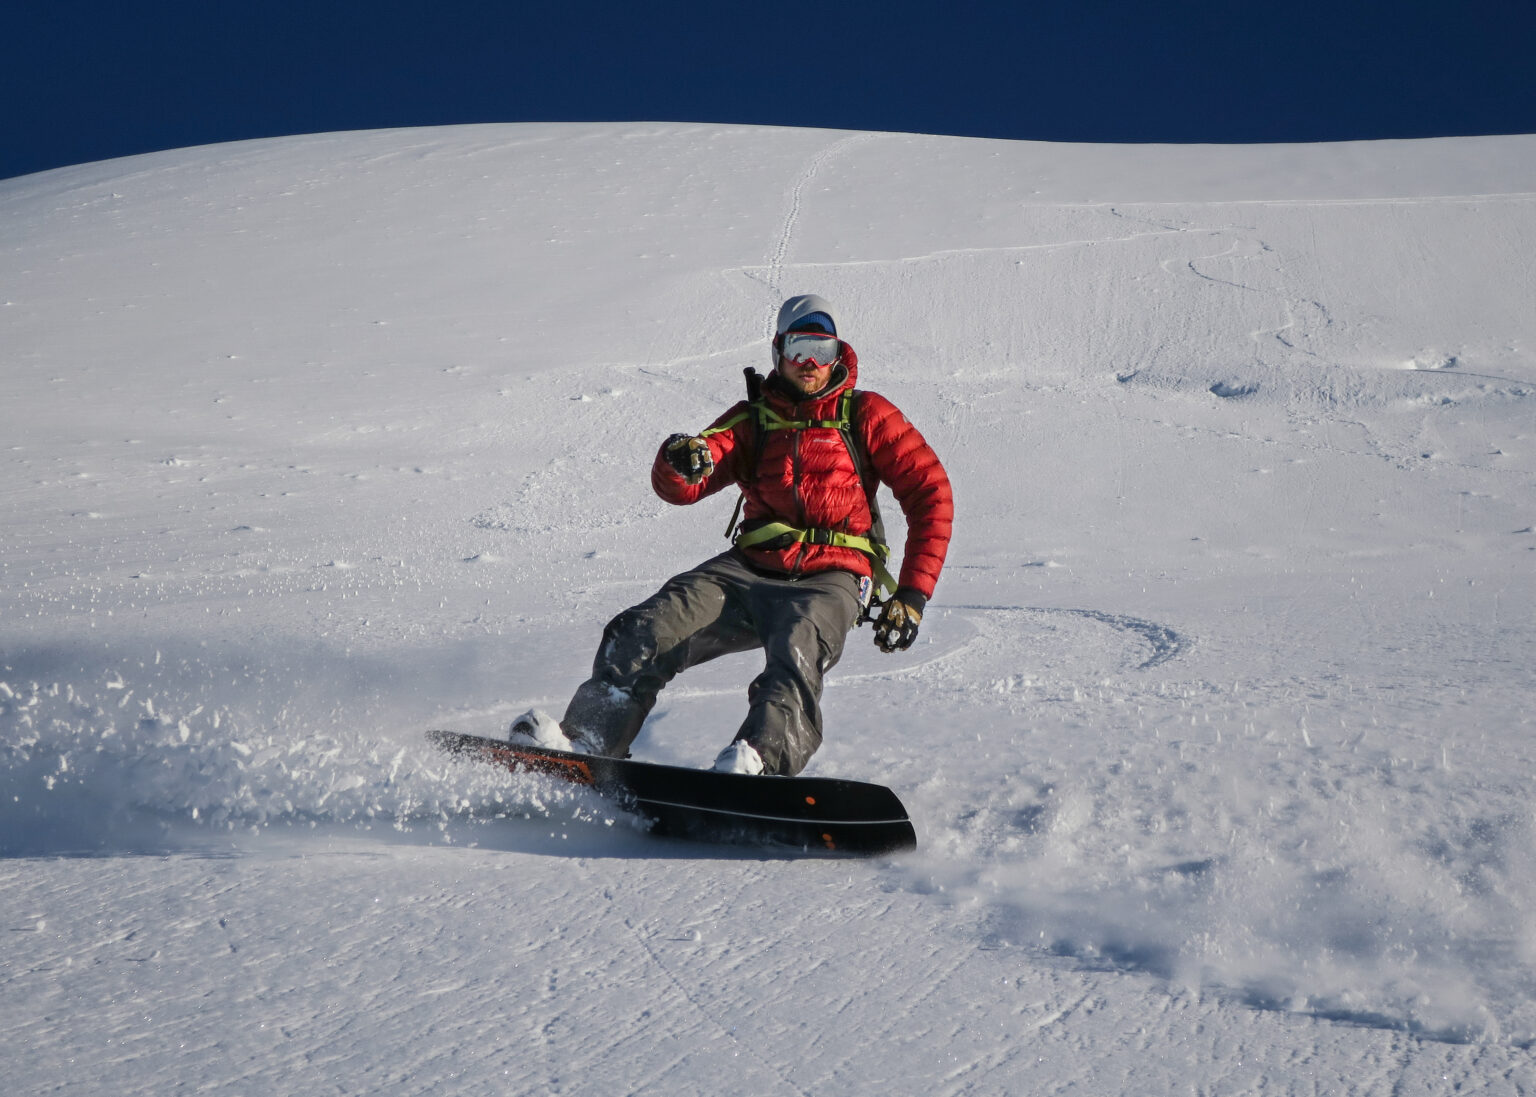 Snowboarding down Tvillingtinden